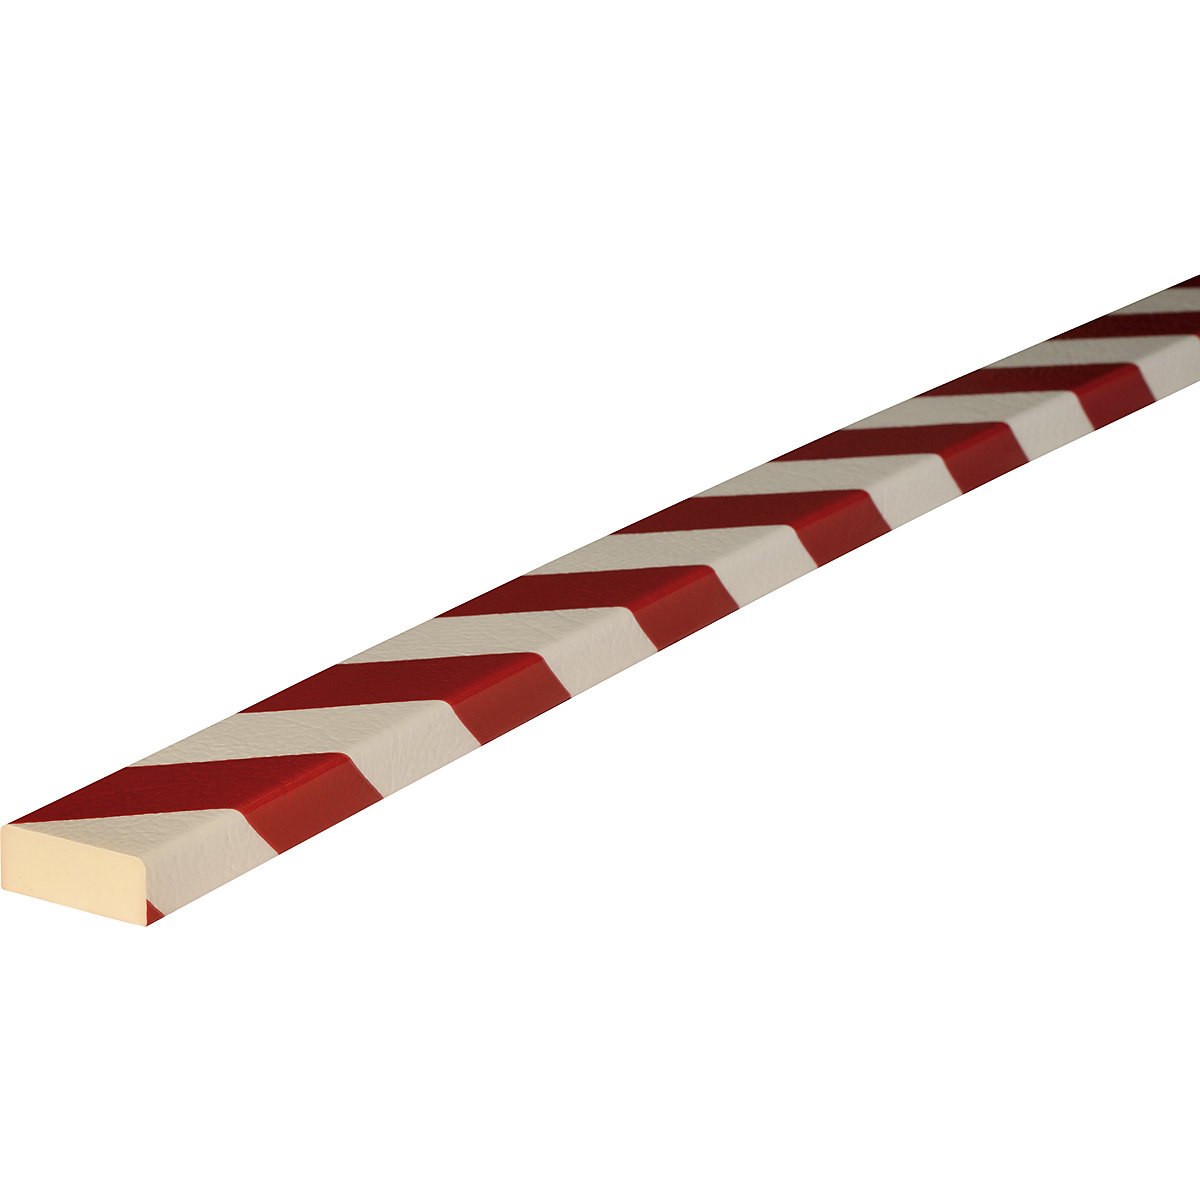 Knuffi®-oppervlaktebescherming – SHG, type D, stuk van 1 m, rood/wit-19